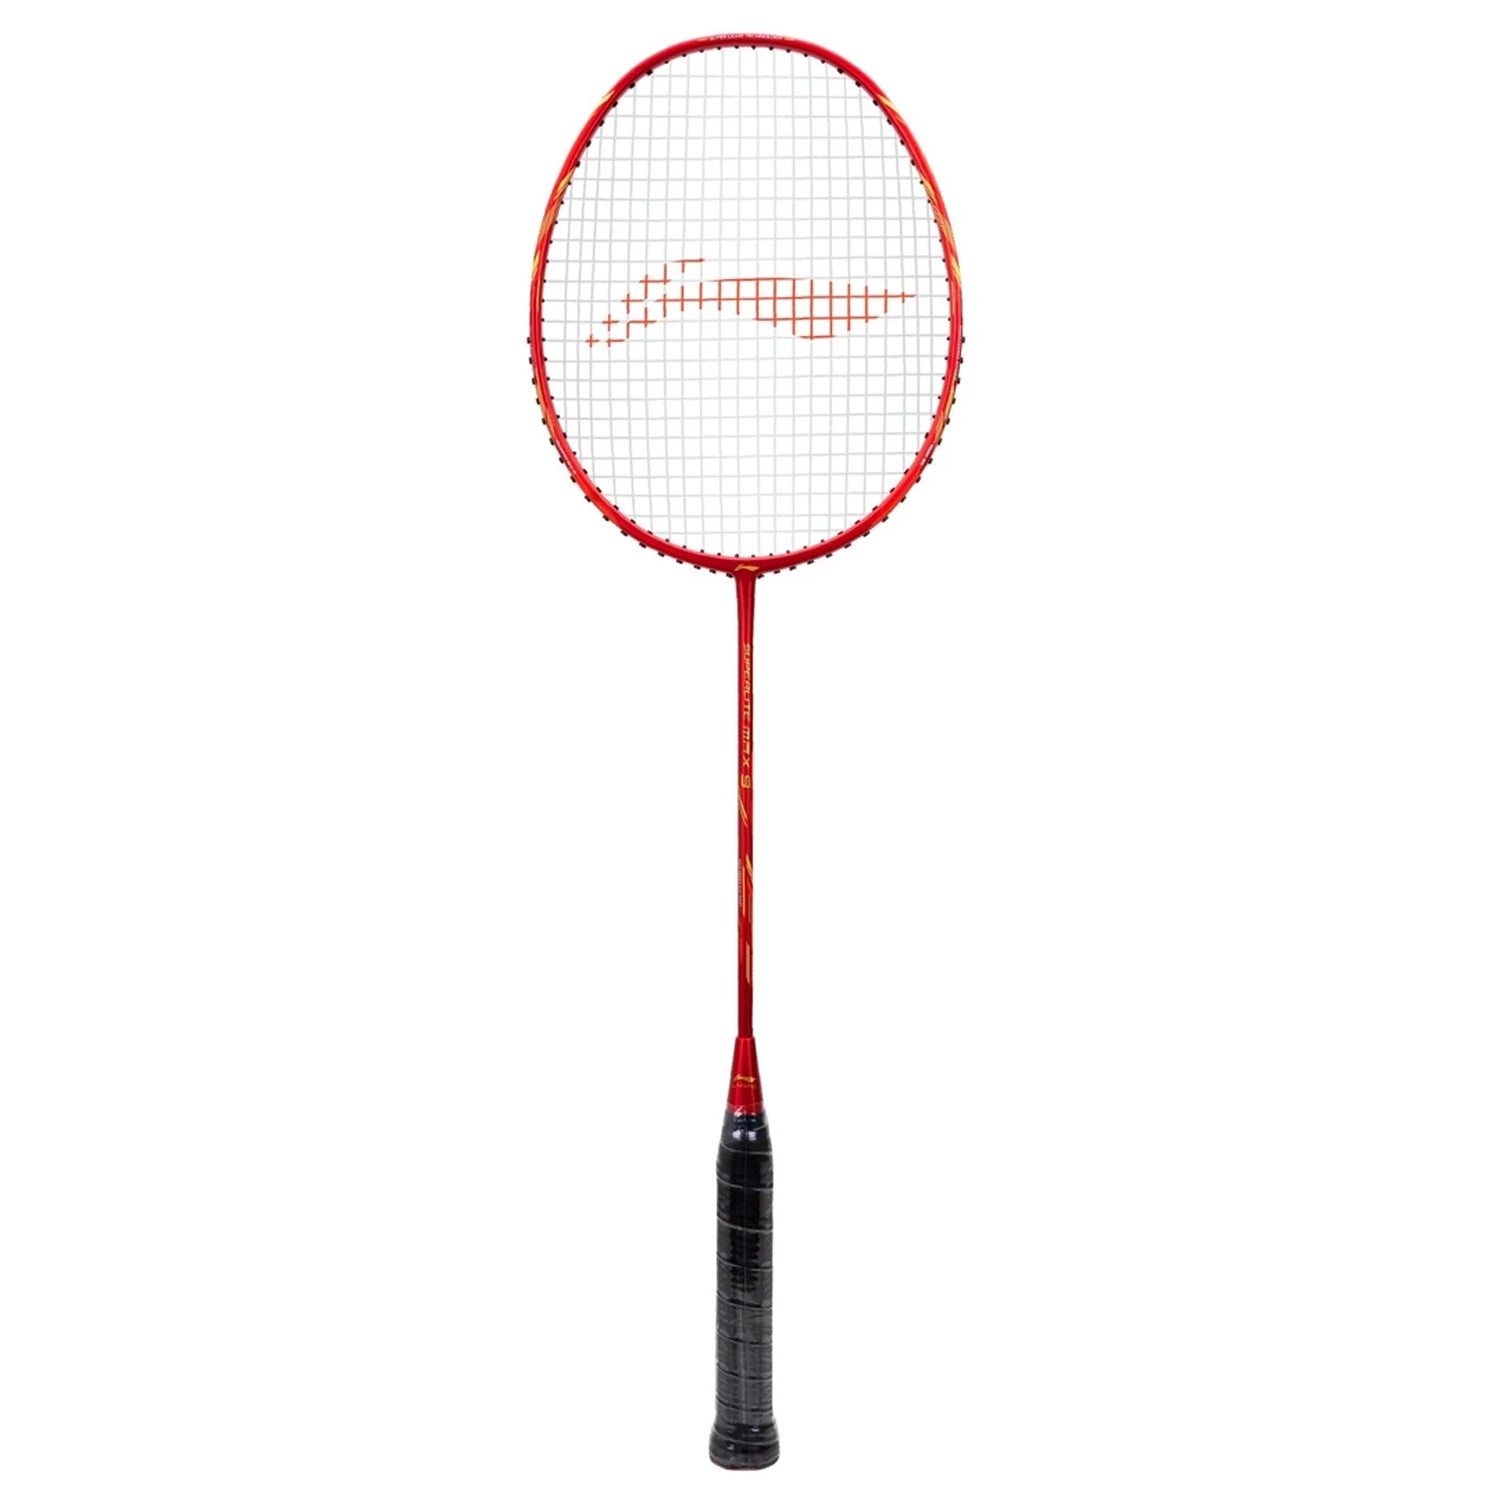 Li-Ning G-Force Superlite Max 9 Strung Badminton Racquet, Red/Gold - Best Price online Prokicksports.com